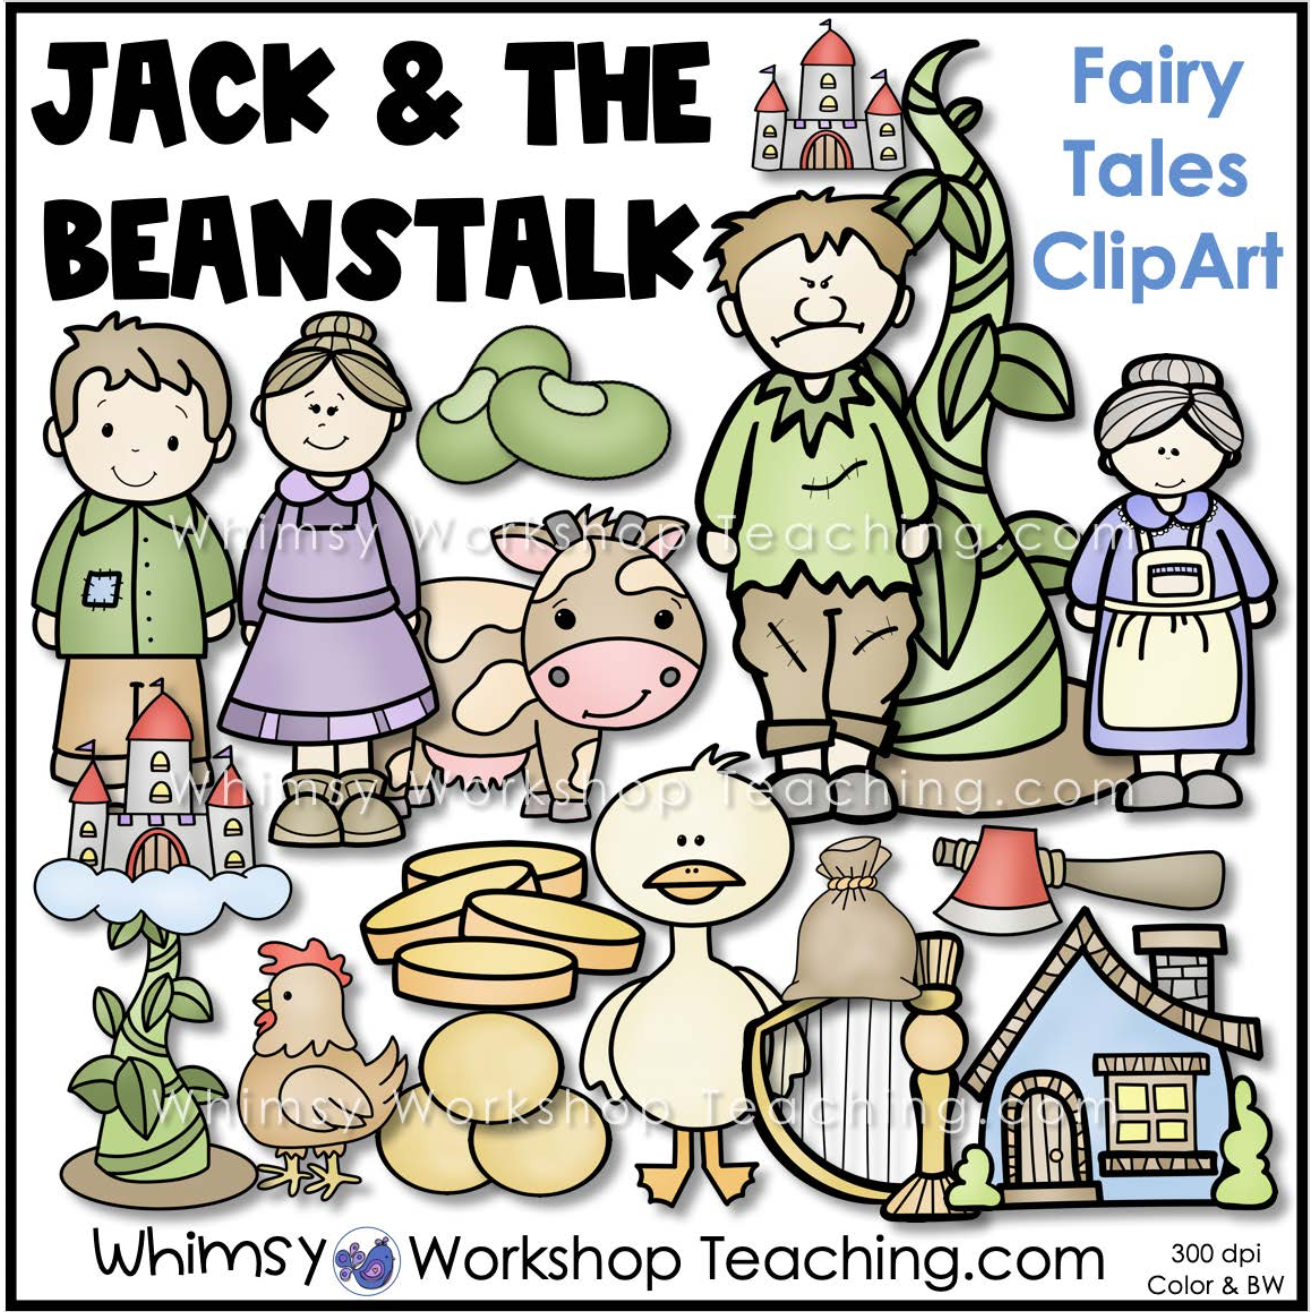 https://whimsyworkshopteaching.com/wp-content/uploads/2023/01/clip-art-clipart-images-color-black-white-fairy-tales-jack-beanstalk.png